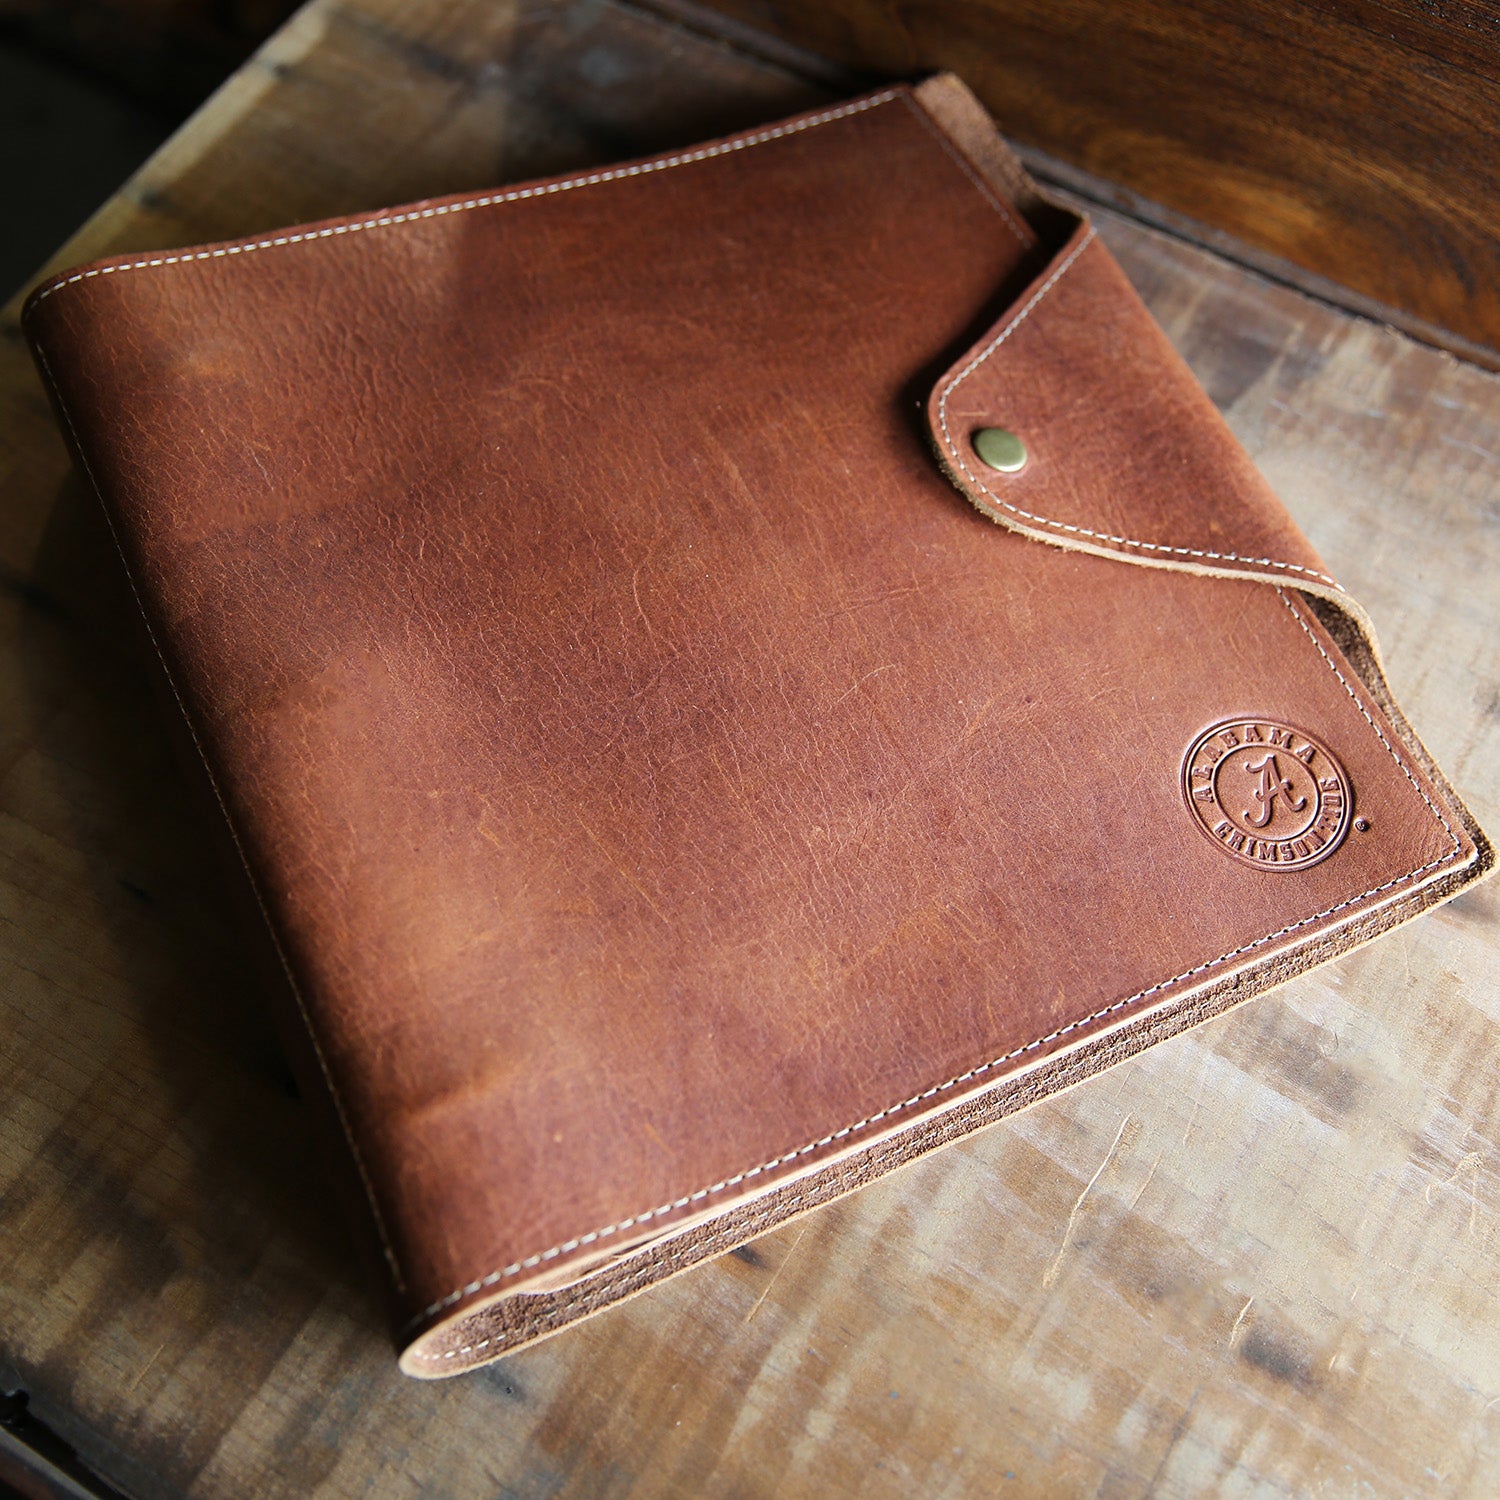 Fine leather 3 ring 1.5" binder notebook with Alabama Crimson Tide logo